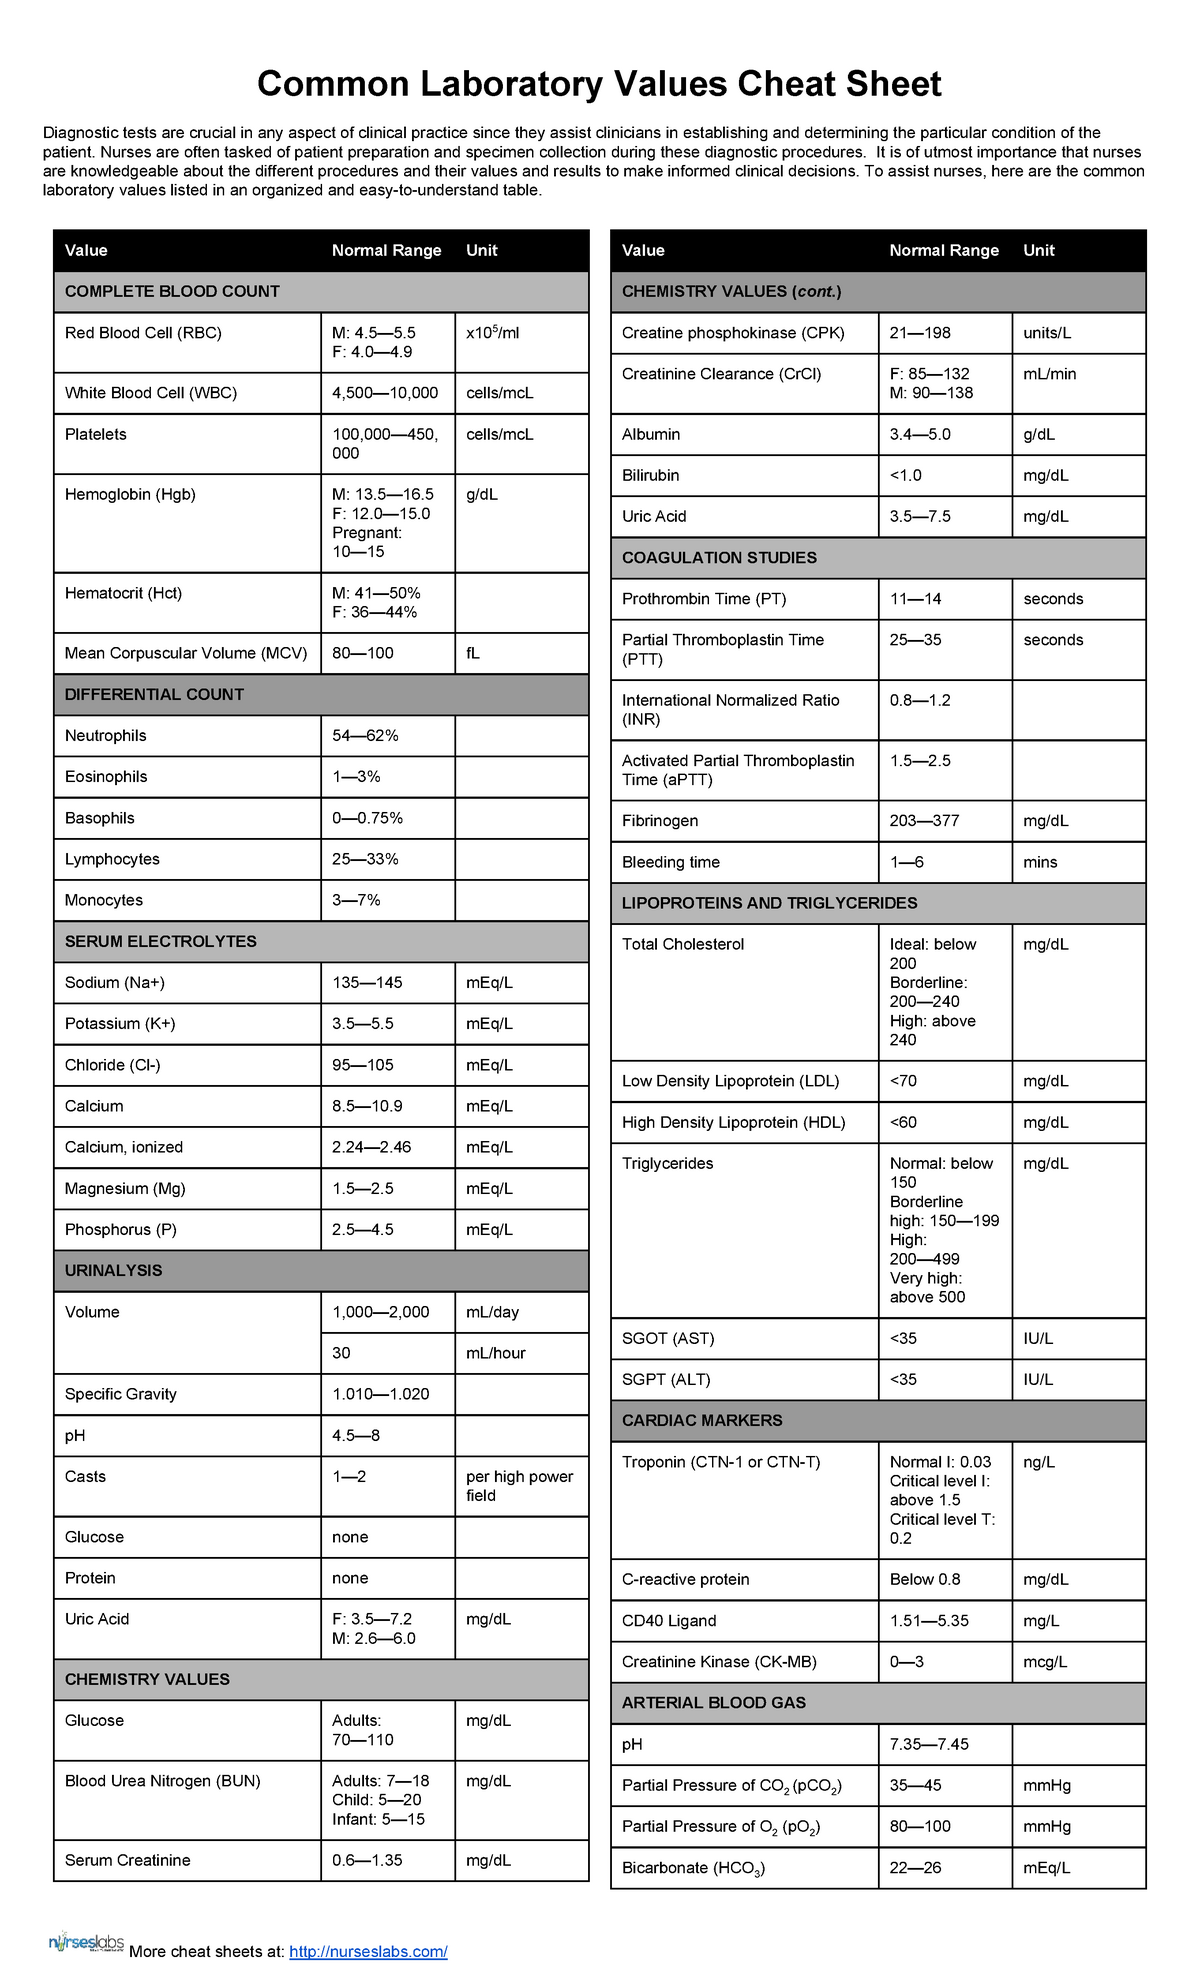 Lab Ranges & Interpretation Cheat Sheet 